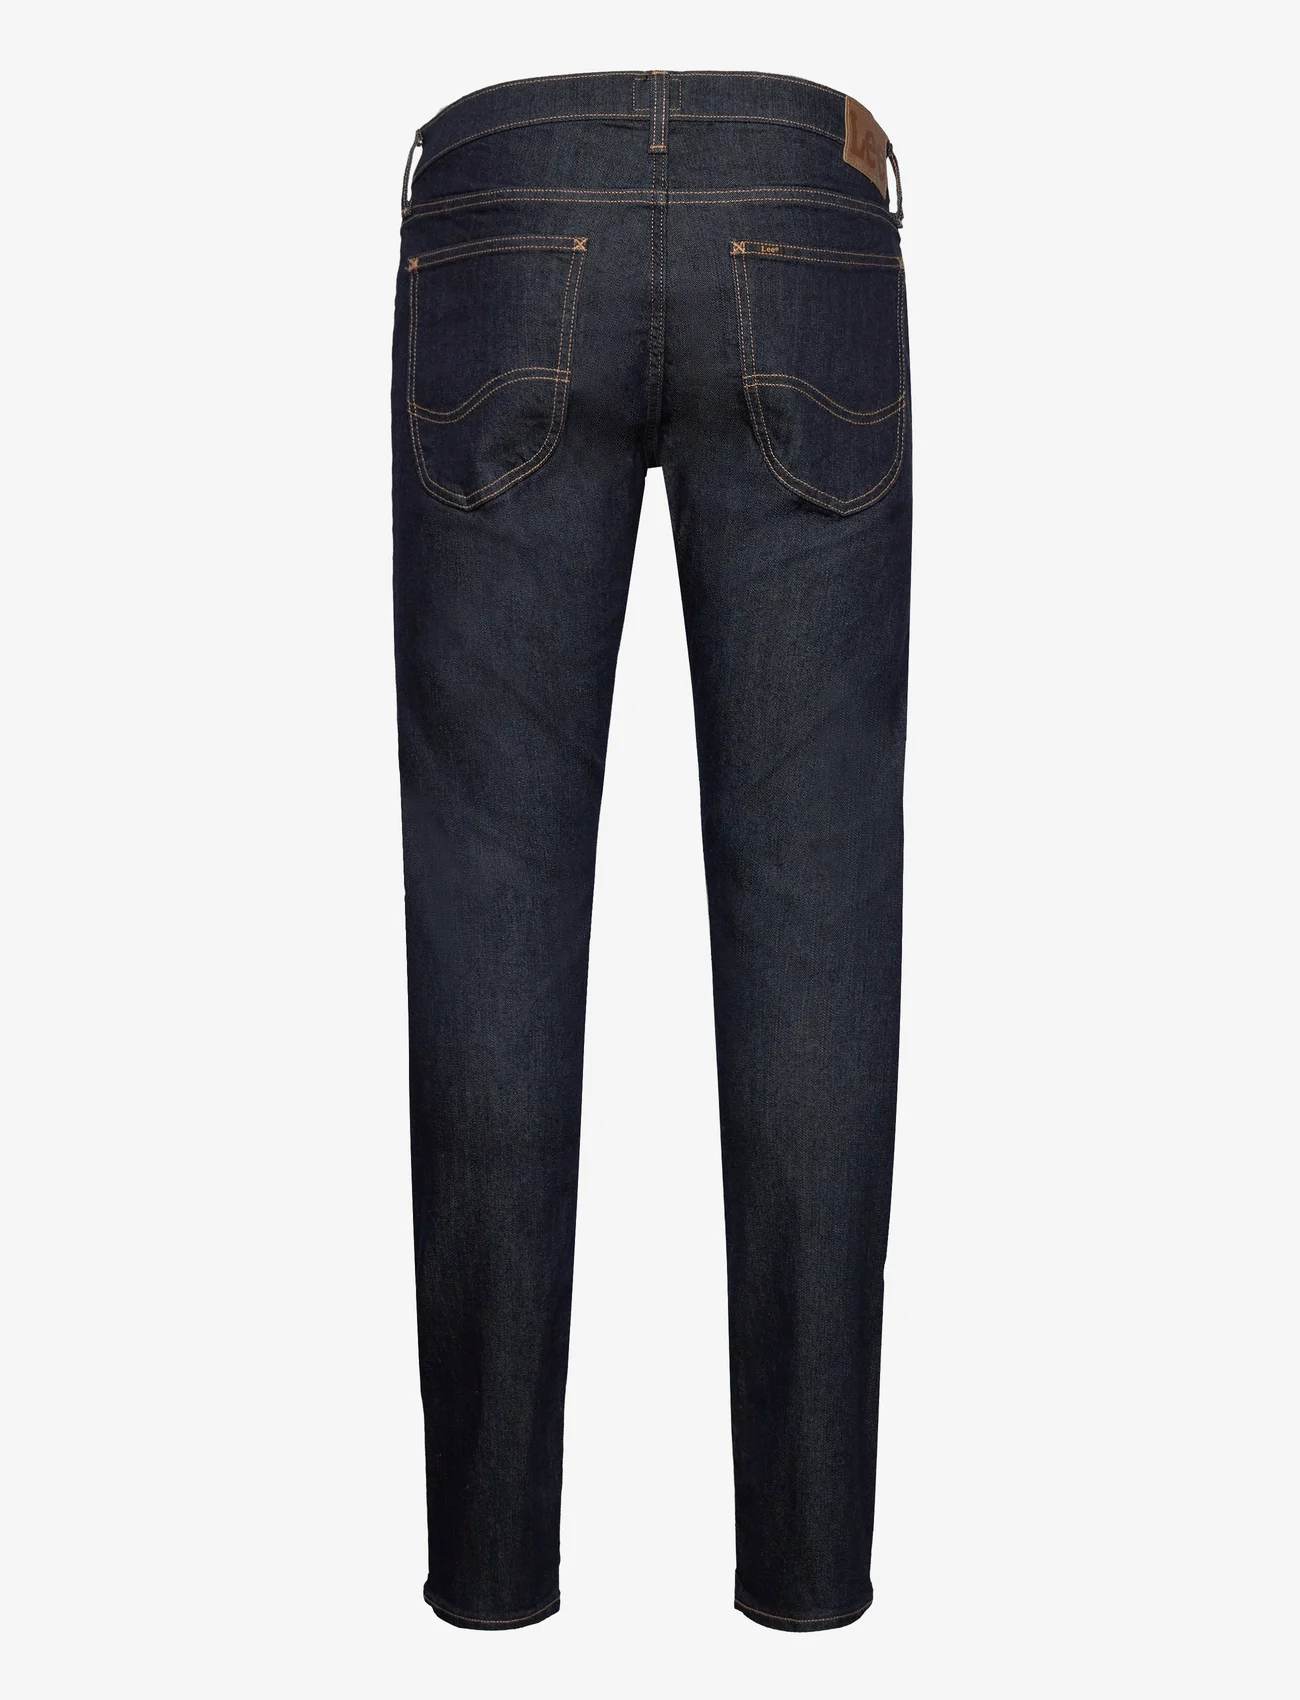 Lee Jeans - LUKE - slim jeans - rinse - 1